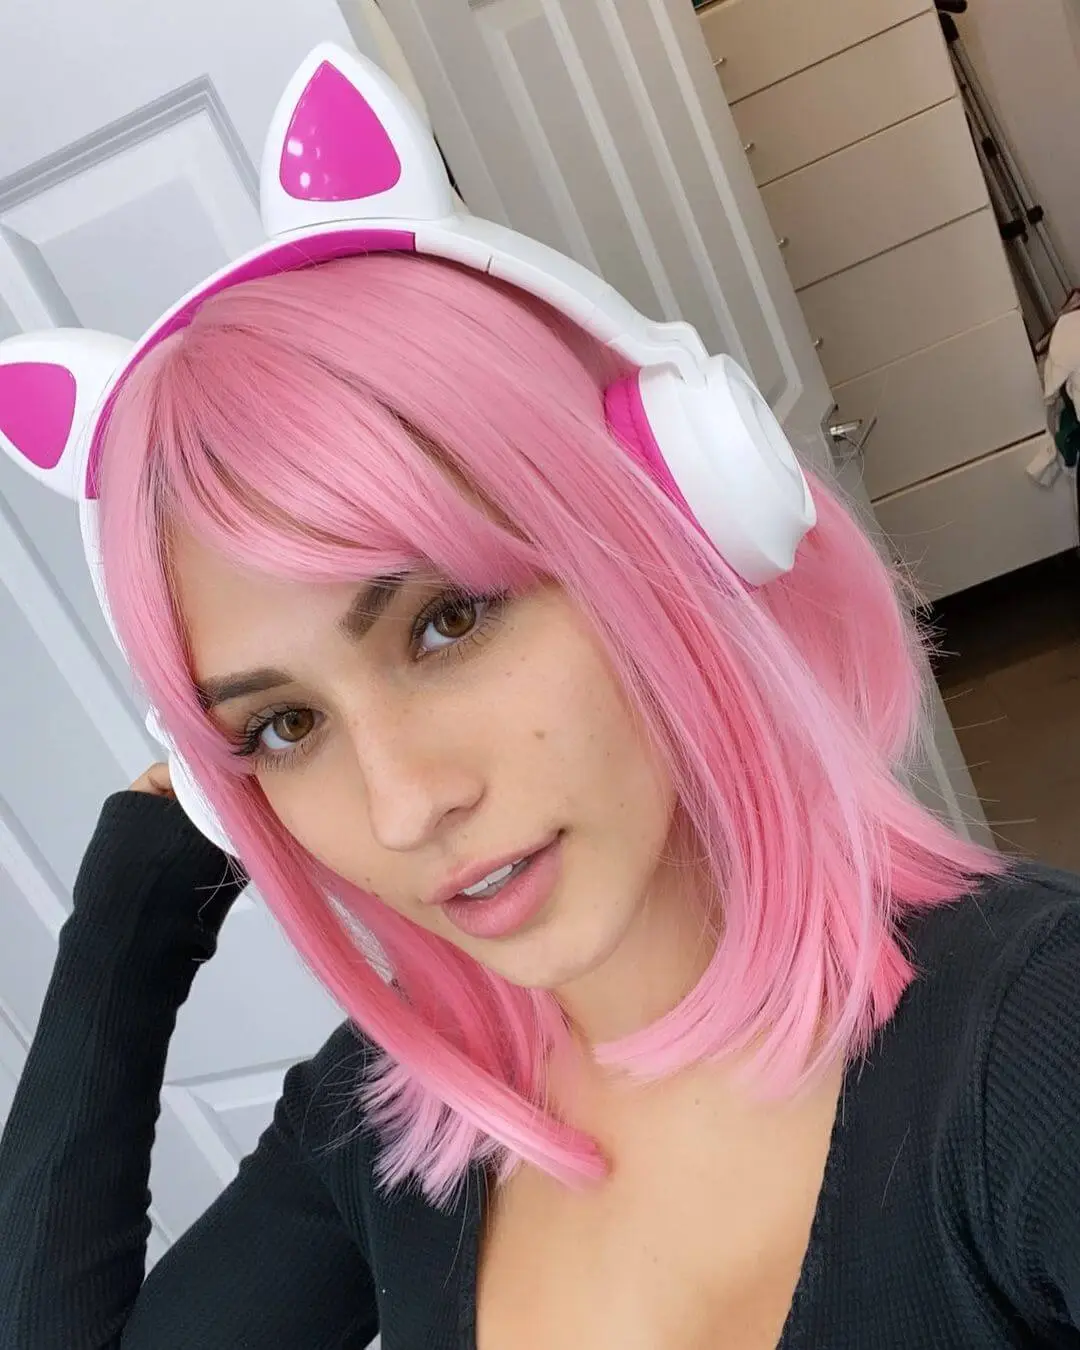 lavaxgrll in pink hair selfie